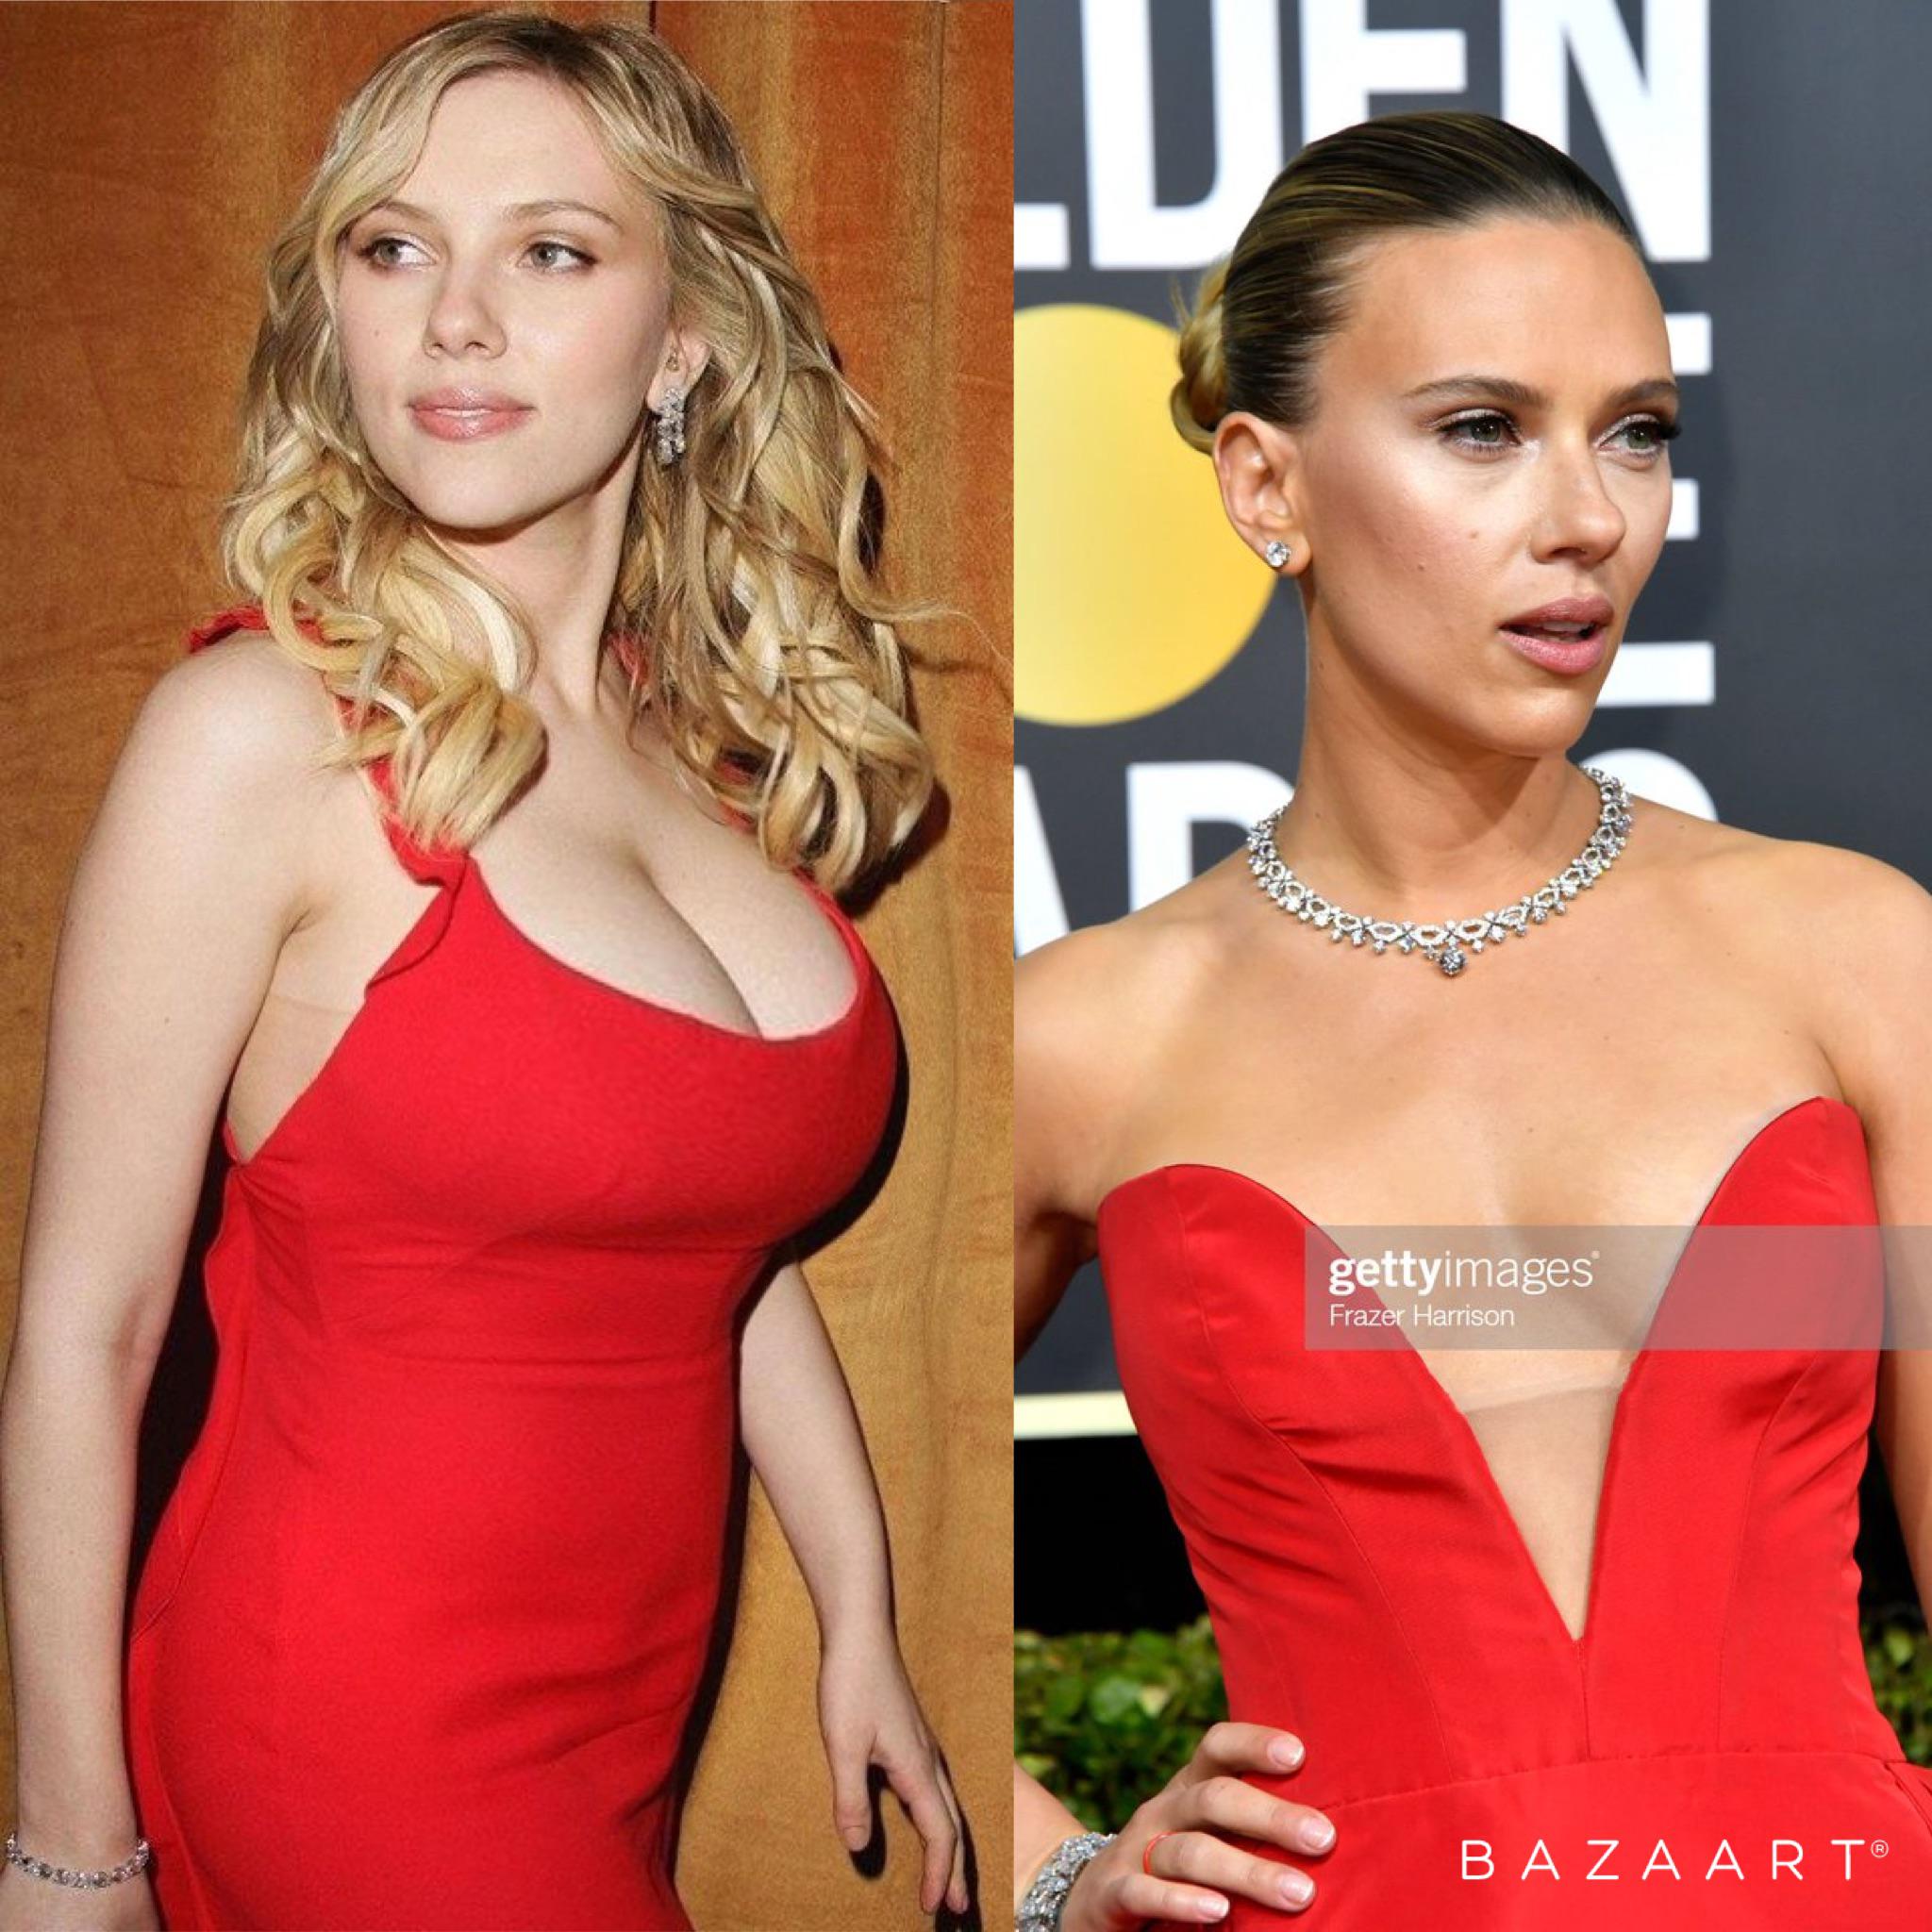 Scarlett Johansson - Do you guys prefer bigger or skinny? 50